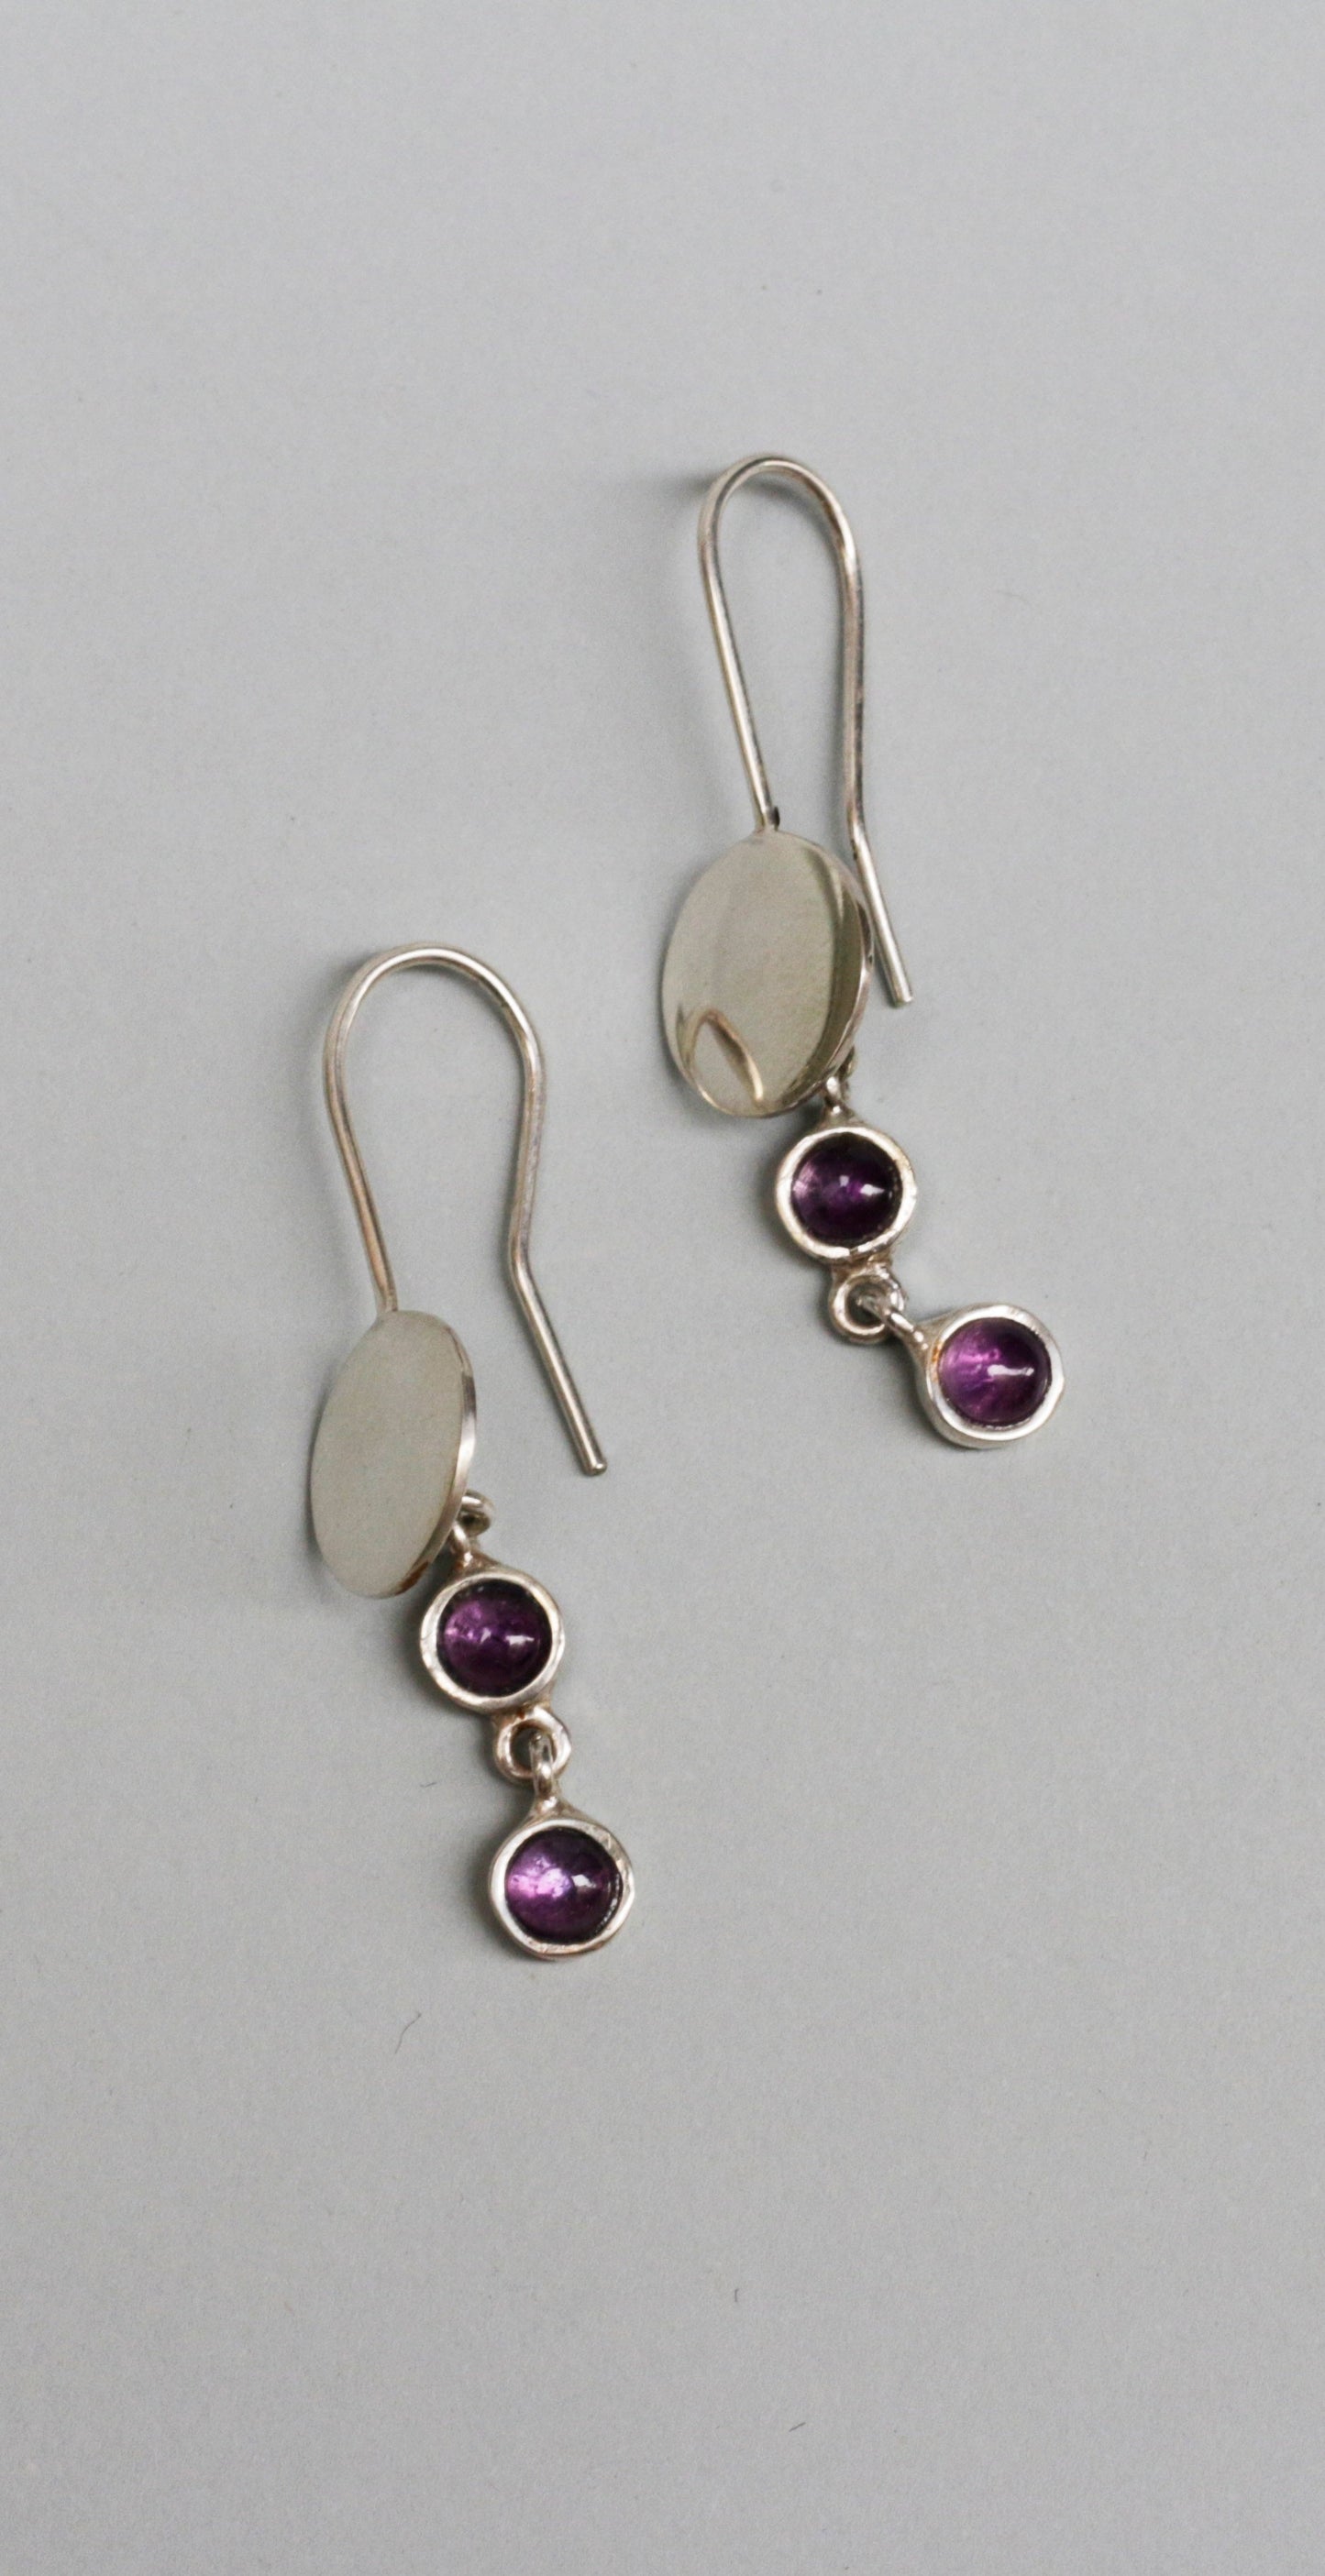 Astres silver earrings Amethyst stones